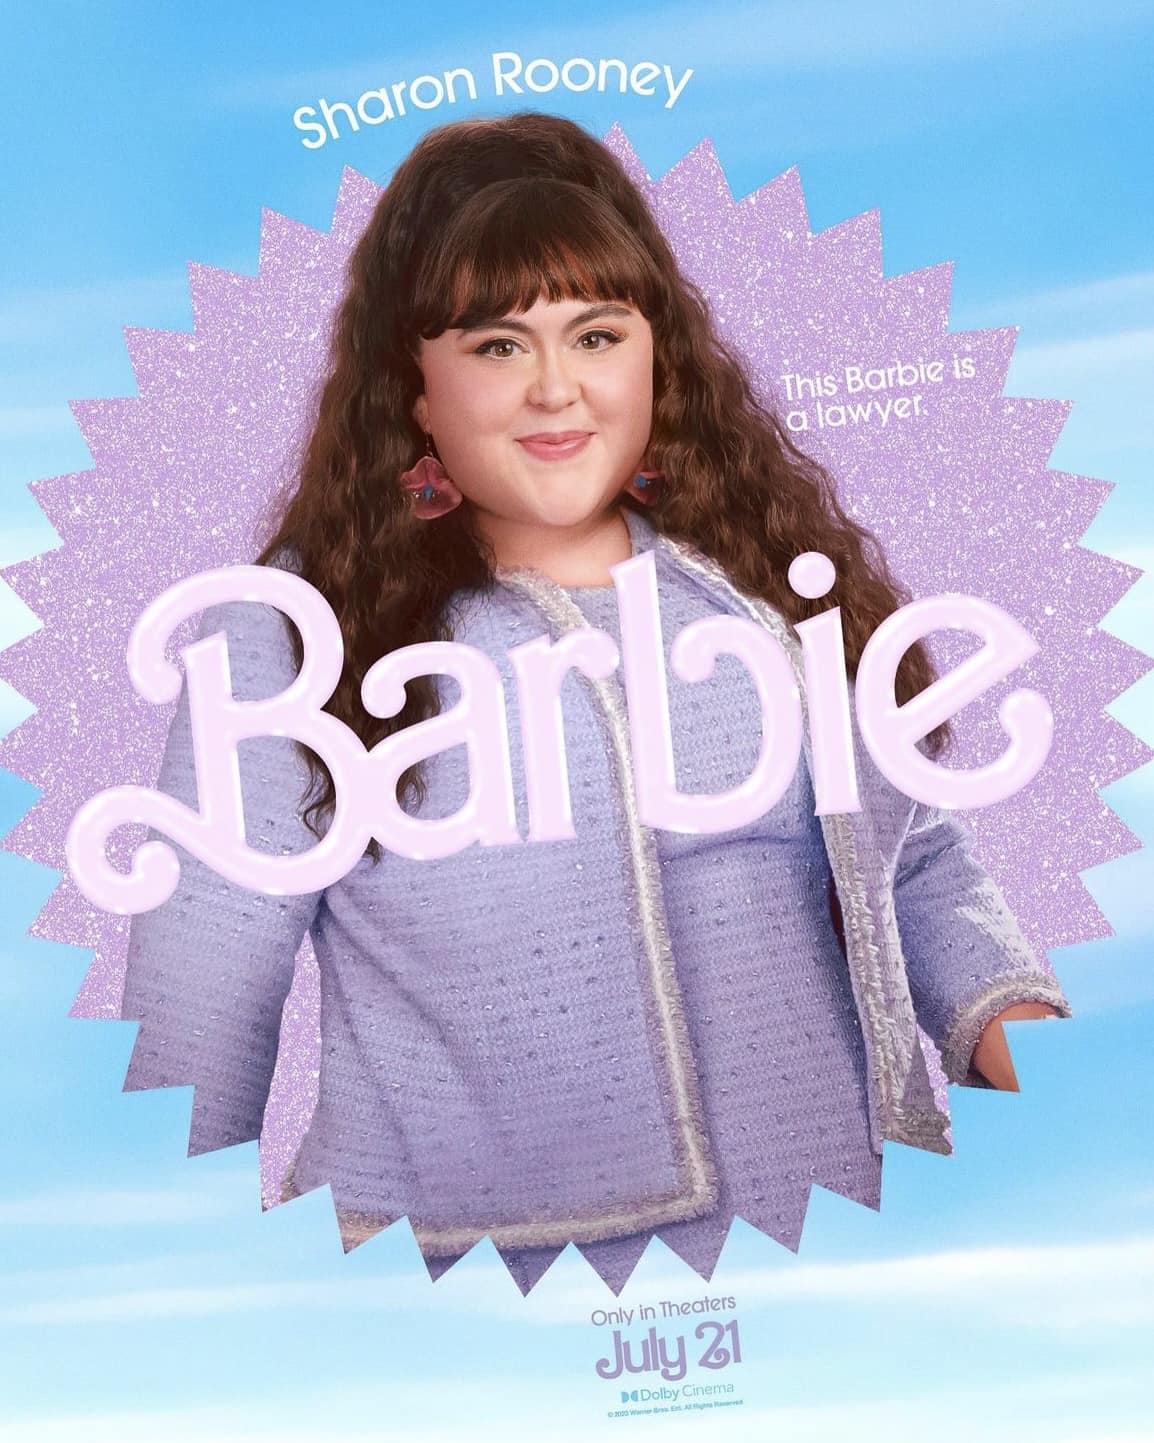 Sharon Rooney as Barbie